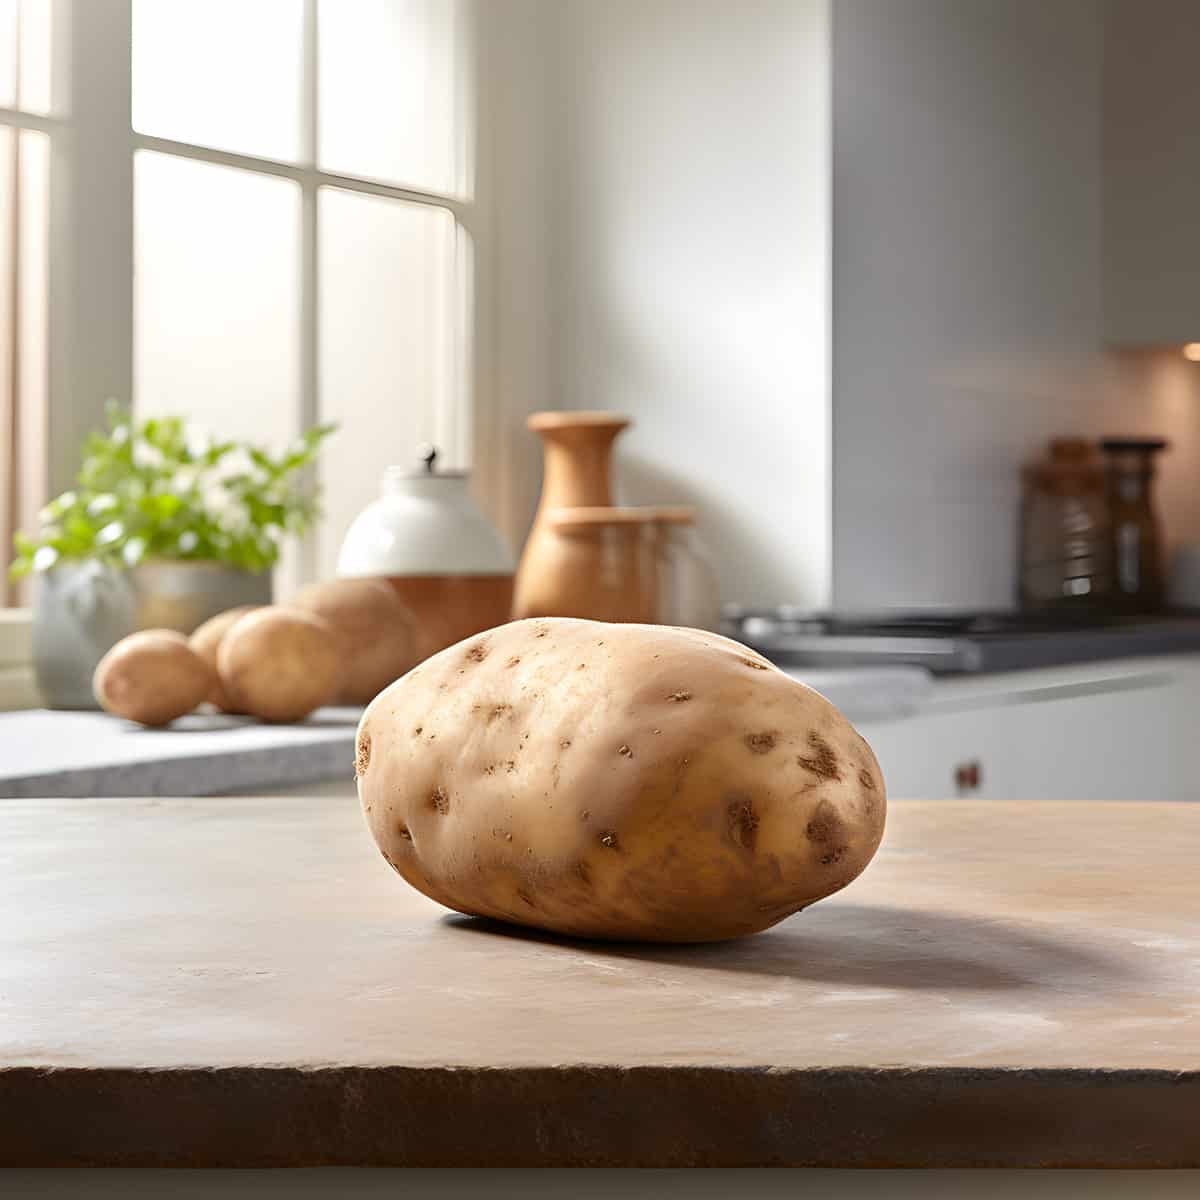 Jersey Royal Potatoes on a kitchen counter